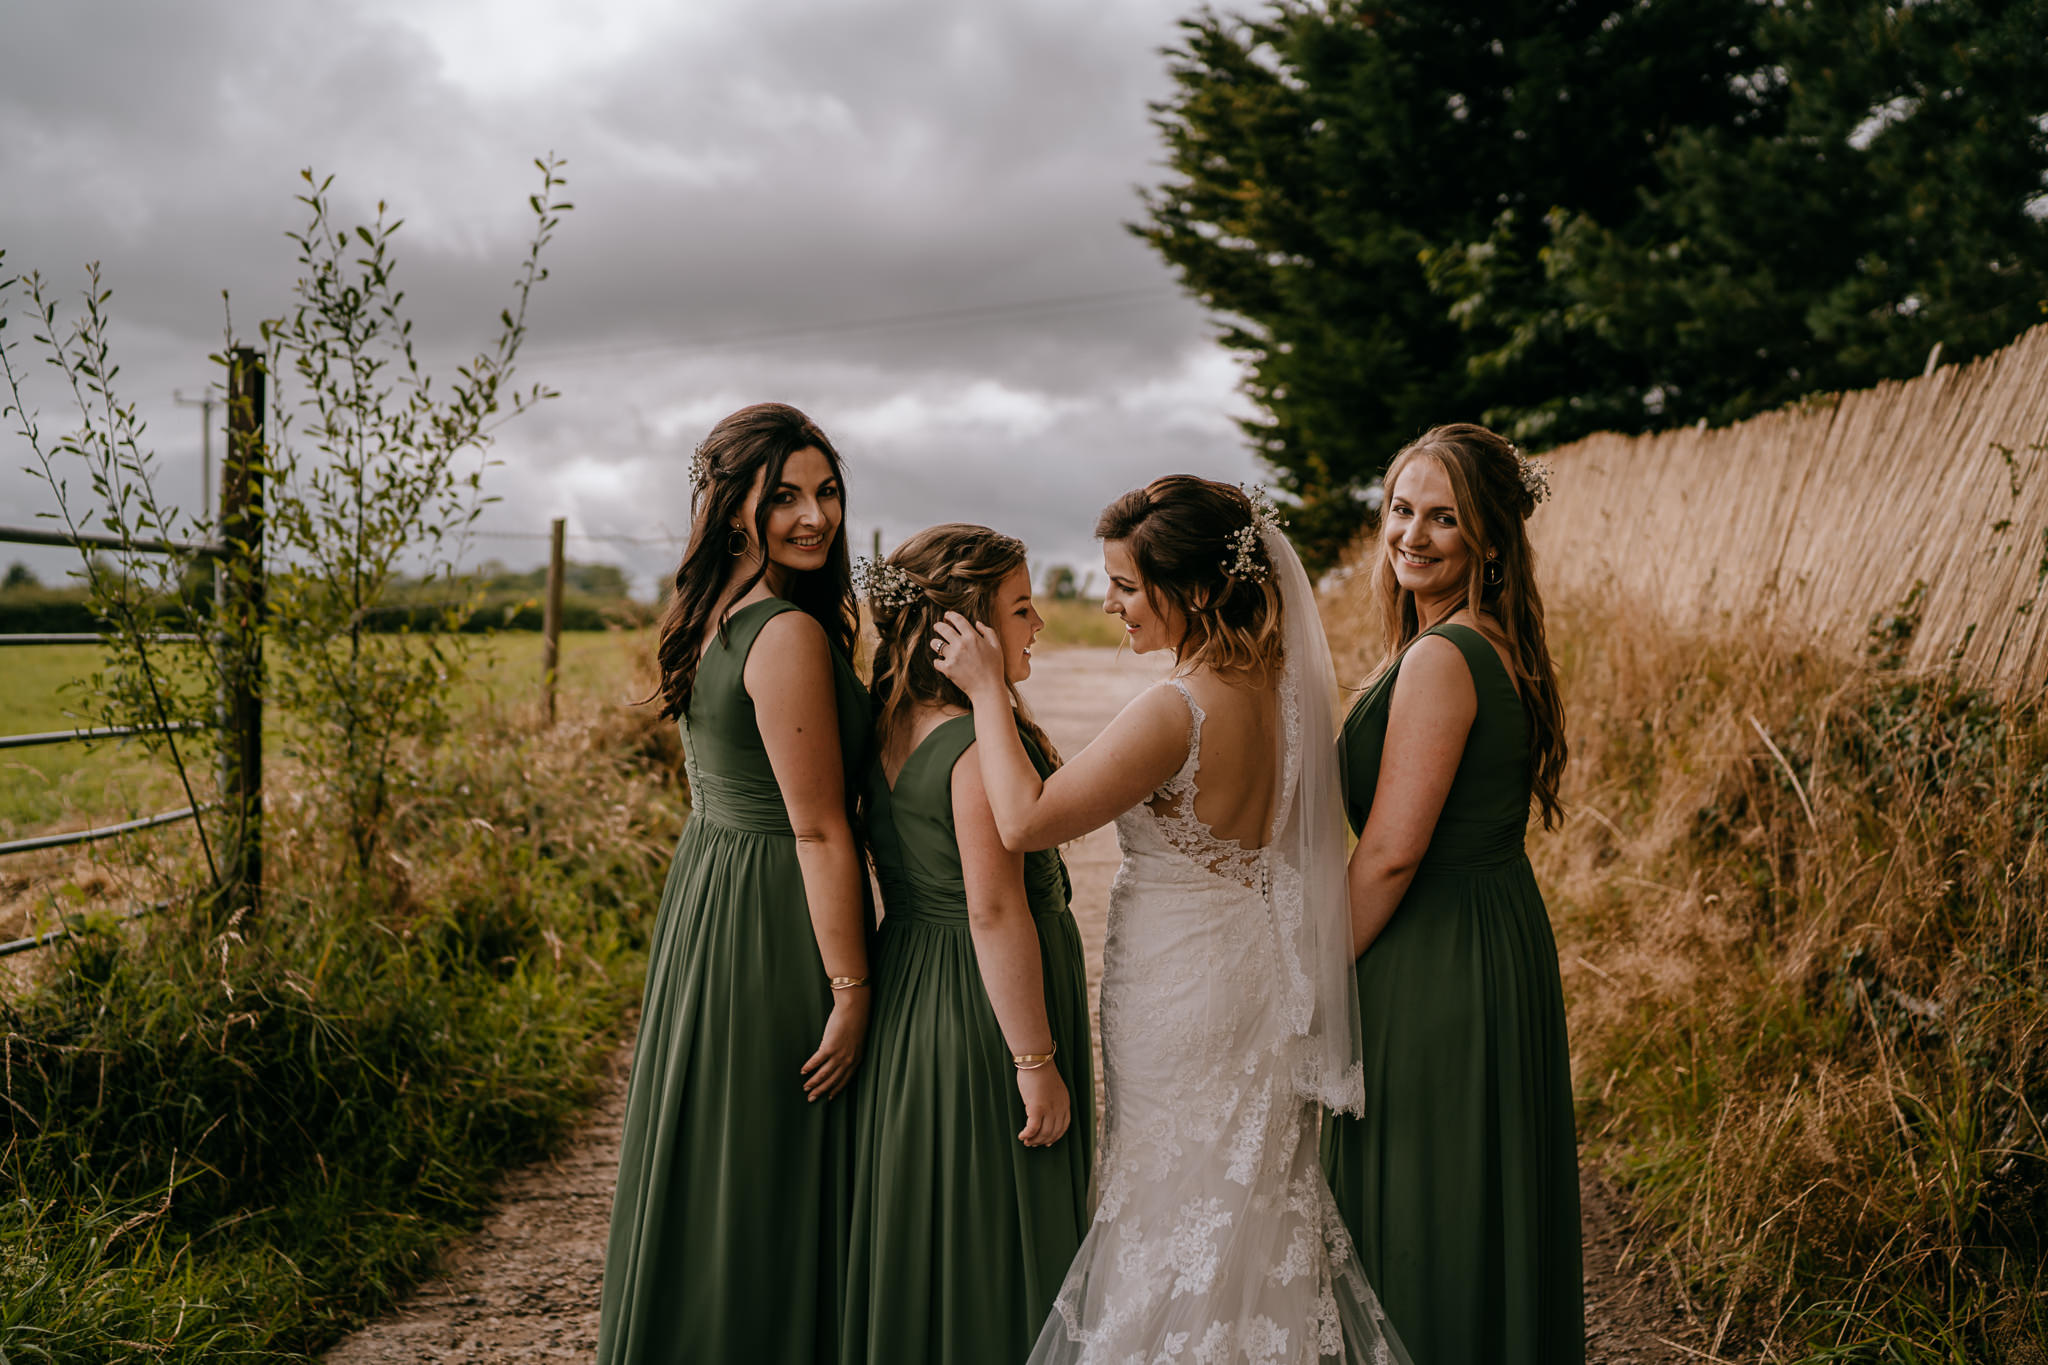  bride and bridesmaids candid moments Northern Ireland wedding photographers 